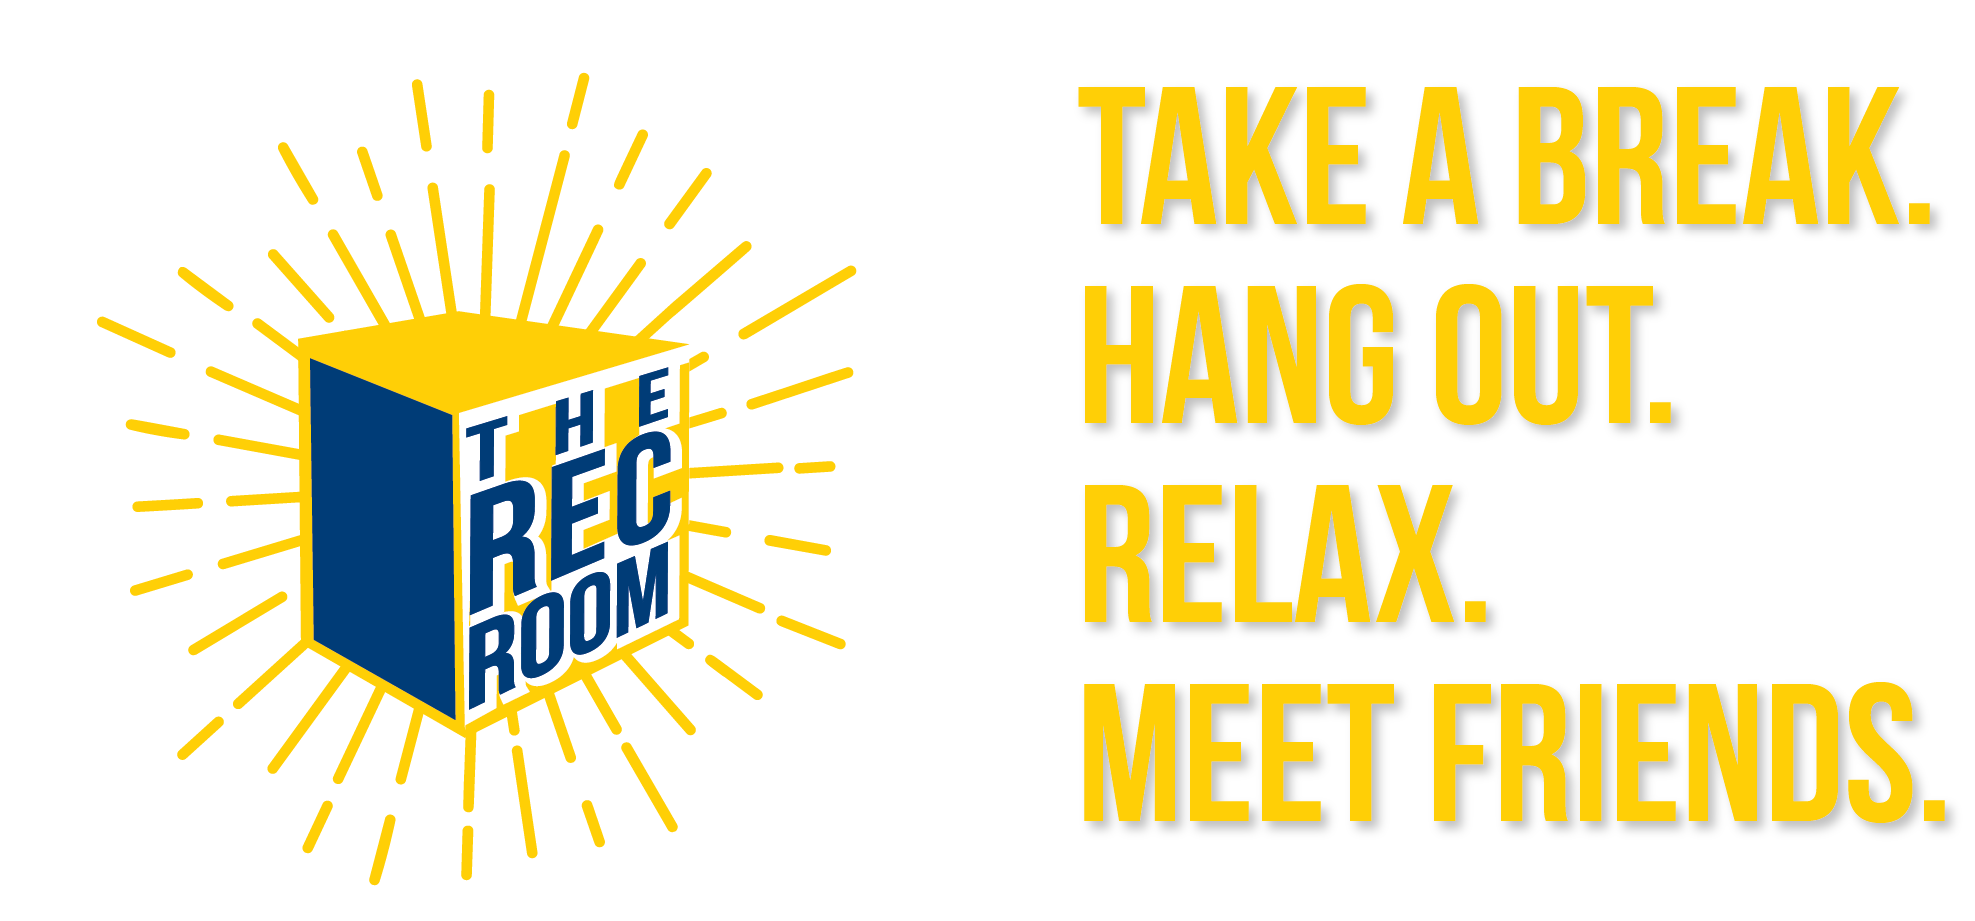 Rec Room. Take a break. Hang out. Relax. Meet friends.